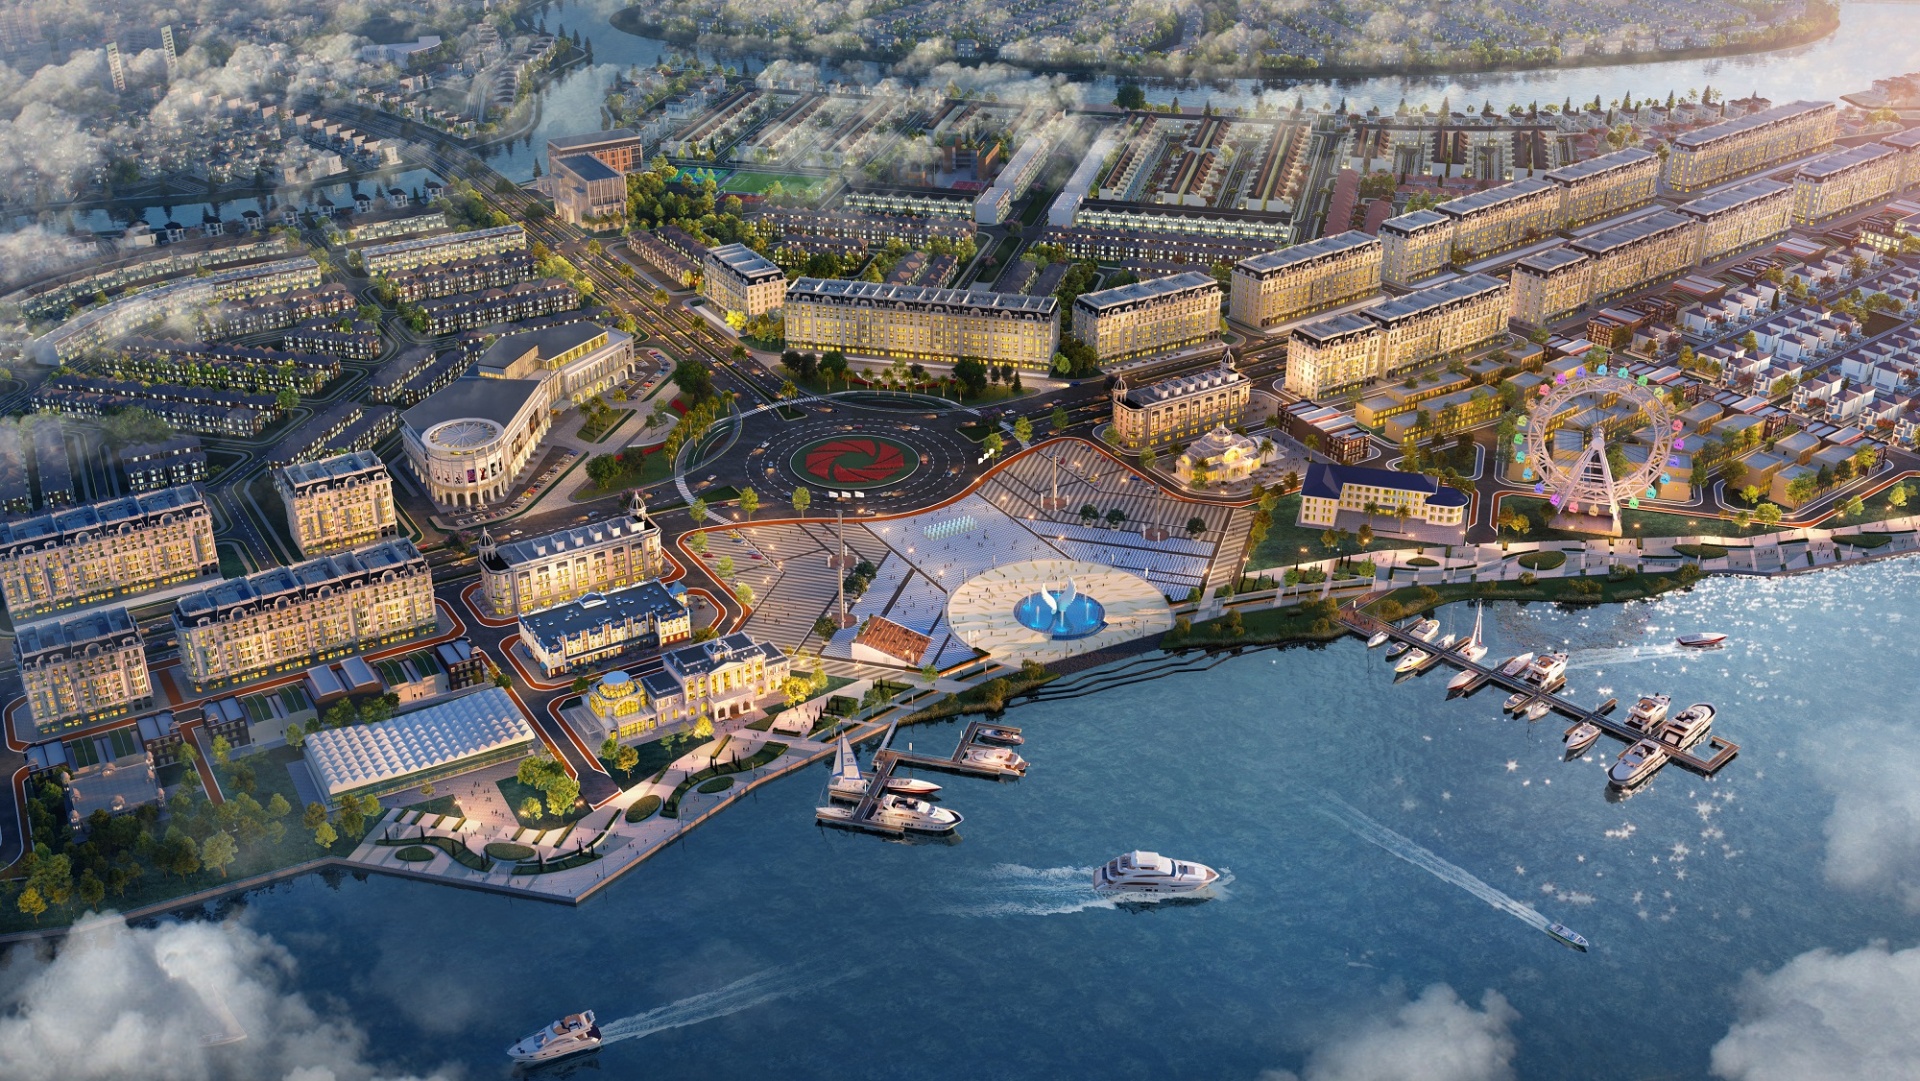 High-class amenities elevate value of Aqua City